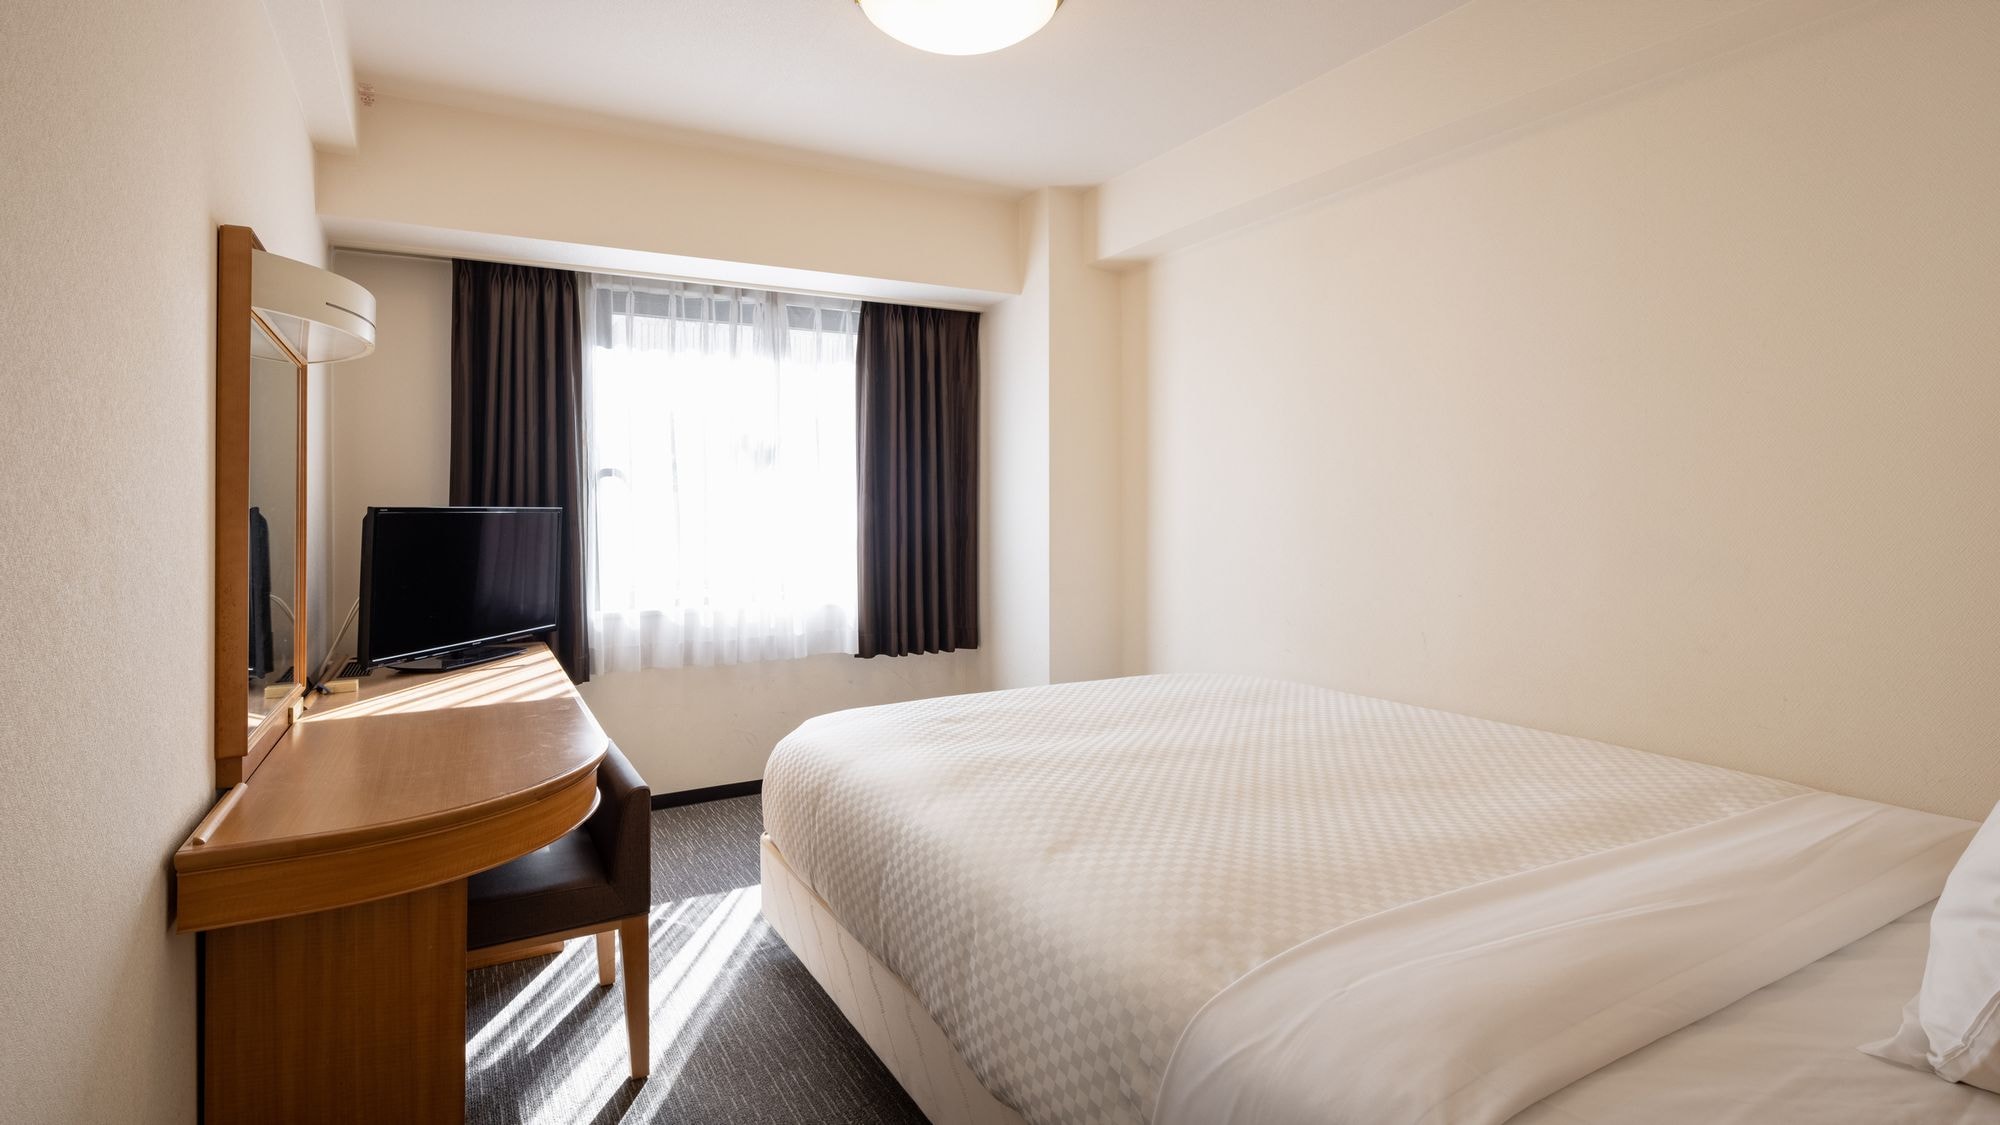 Comfort single room Room size 15㎡, semi-double bed (140cm width)